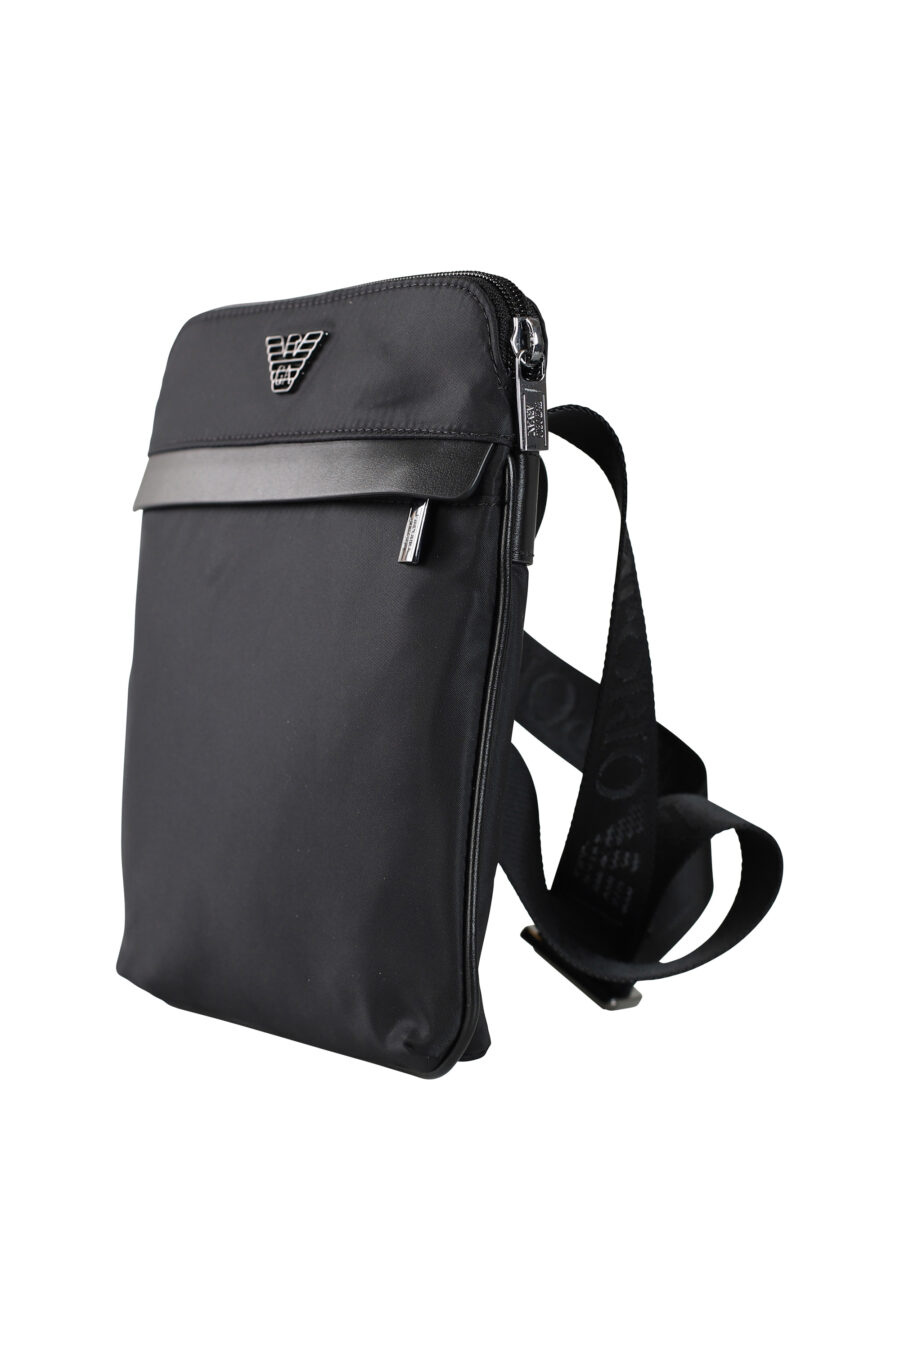 Black shoulder bag with metal mini logo - 8053616709593 2